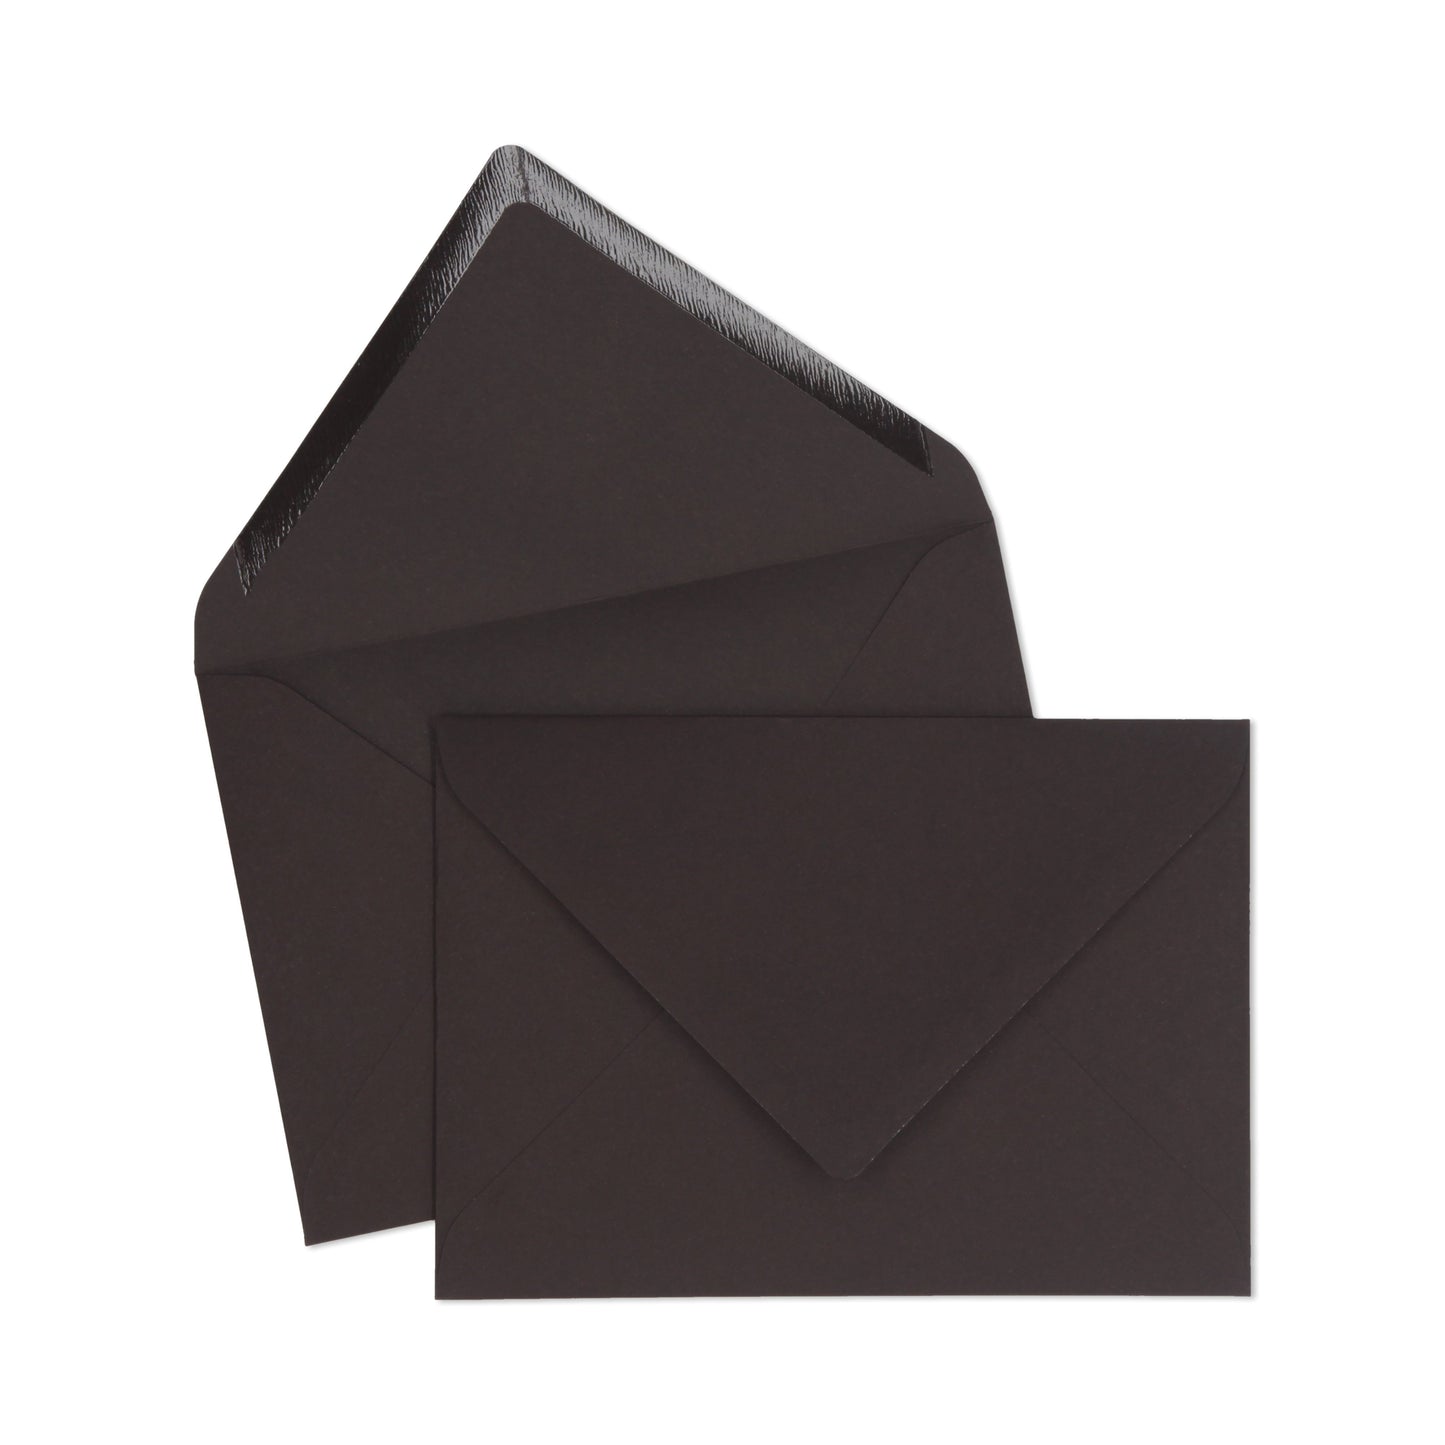 Envelope B6 Dark brown - 10 units